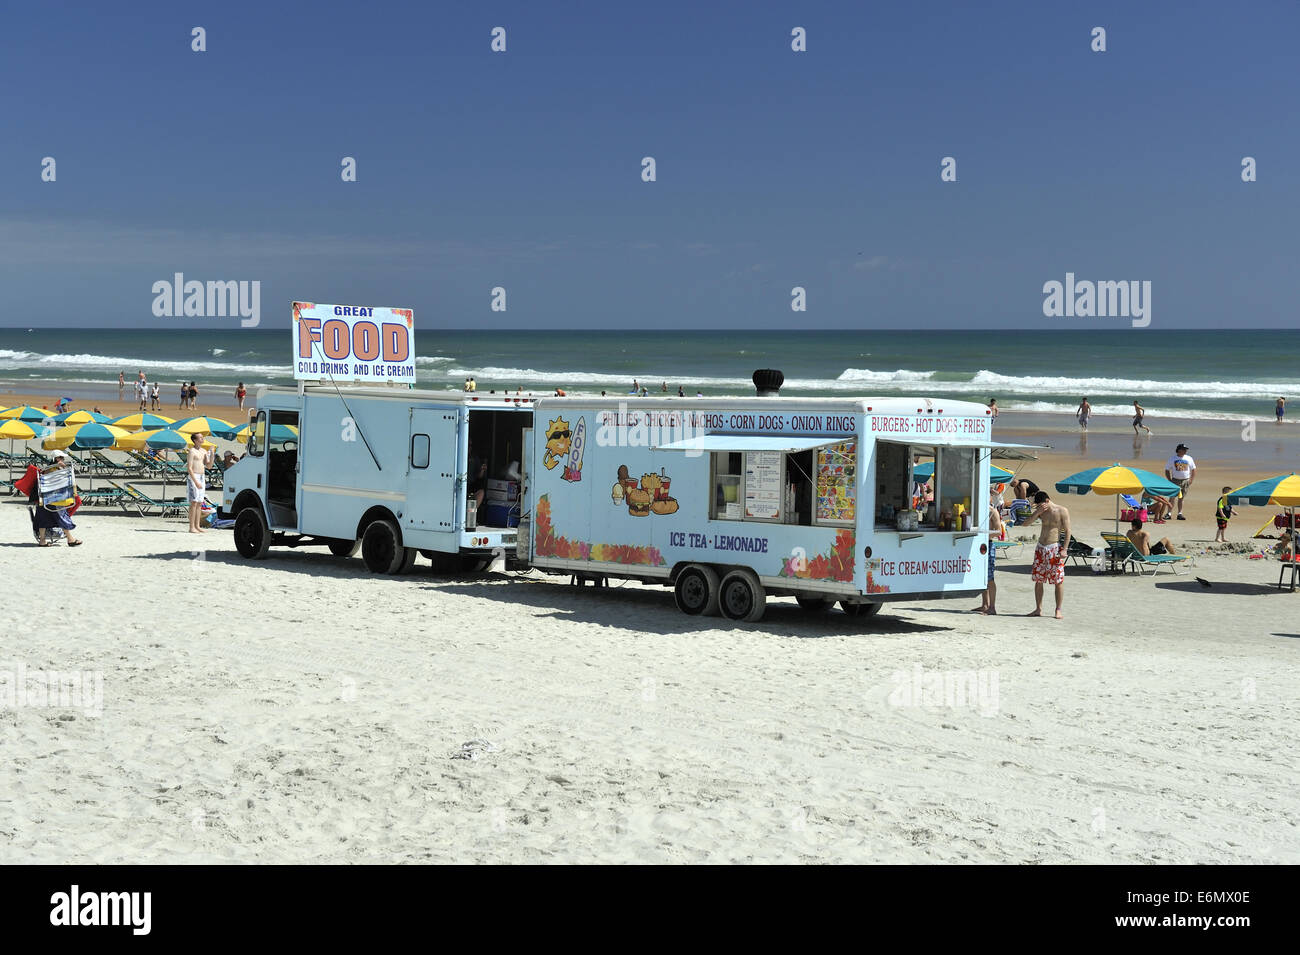 Caravan parked on beach selling food and drink. Daytona Beach, Florida, USA  Stock Photo - Alamy